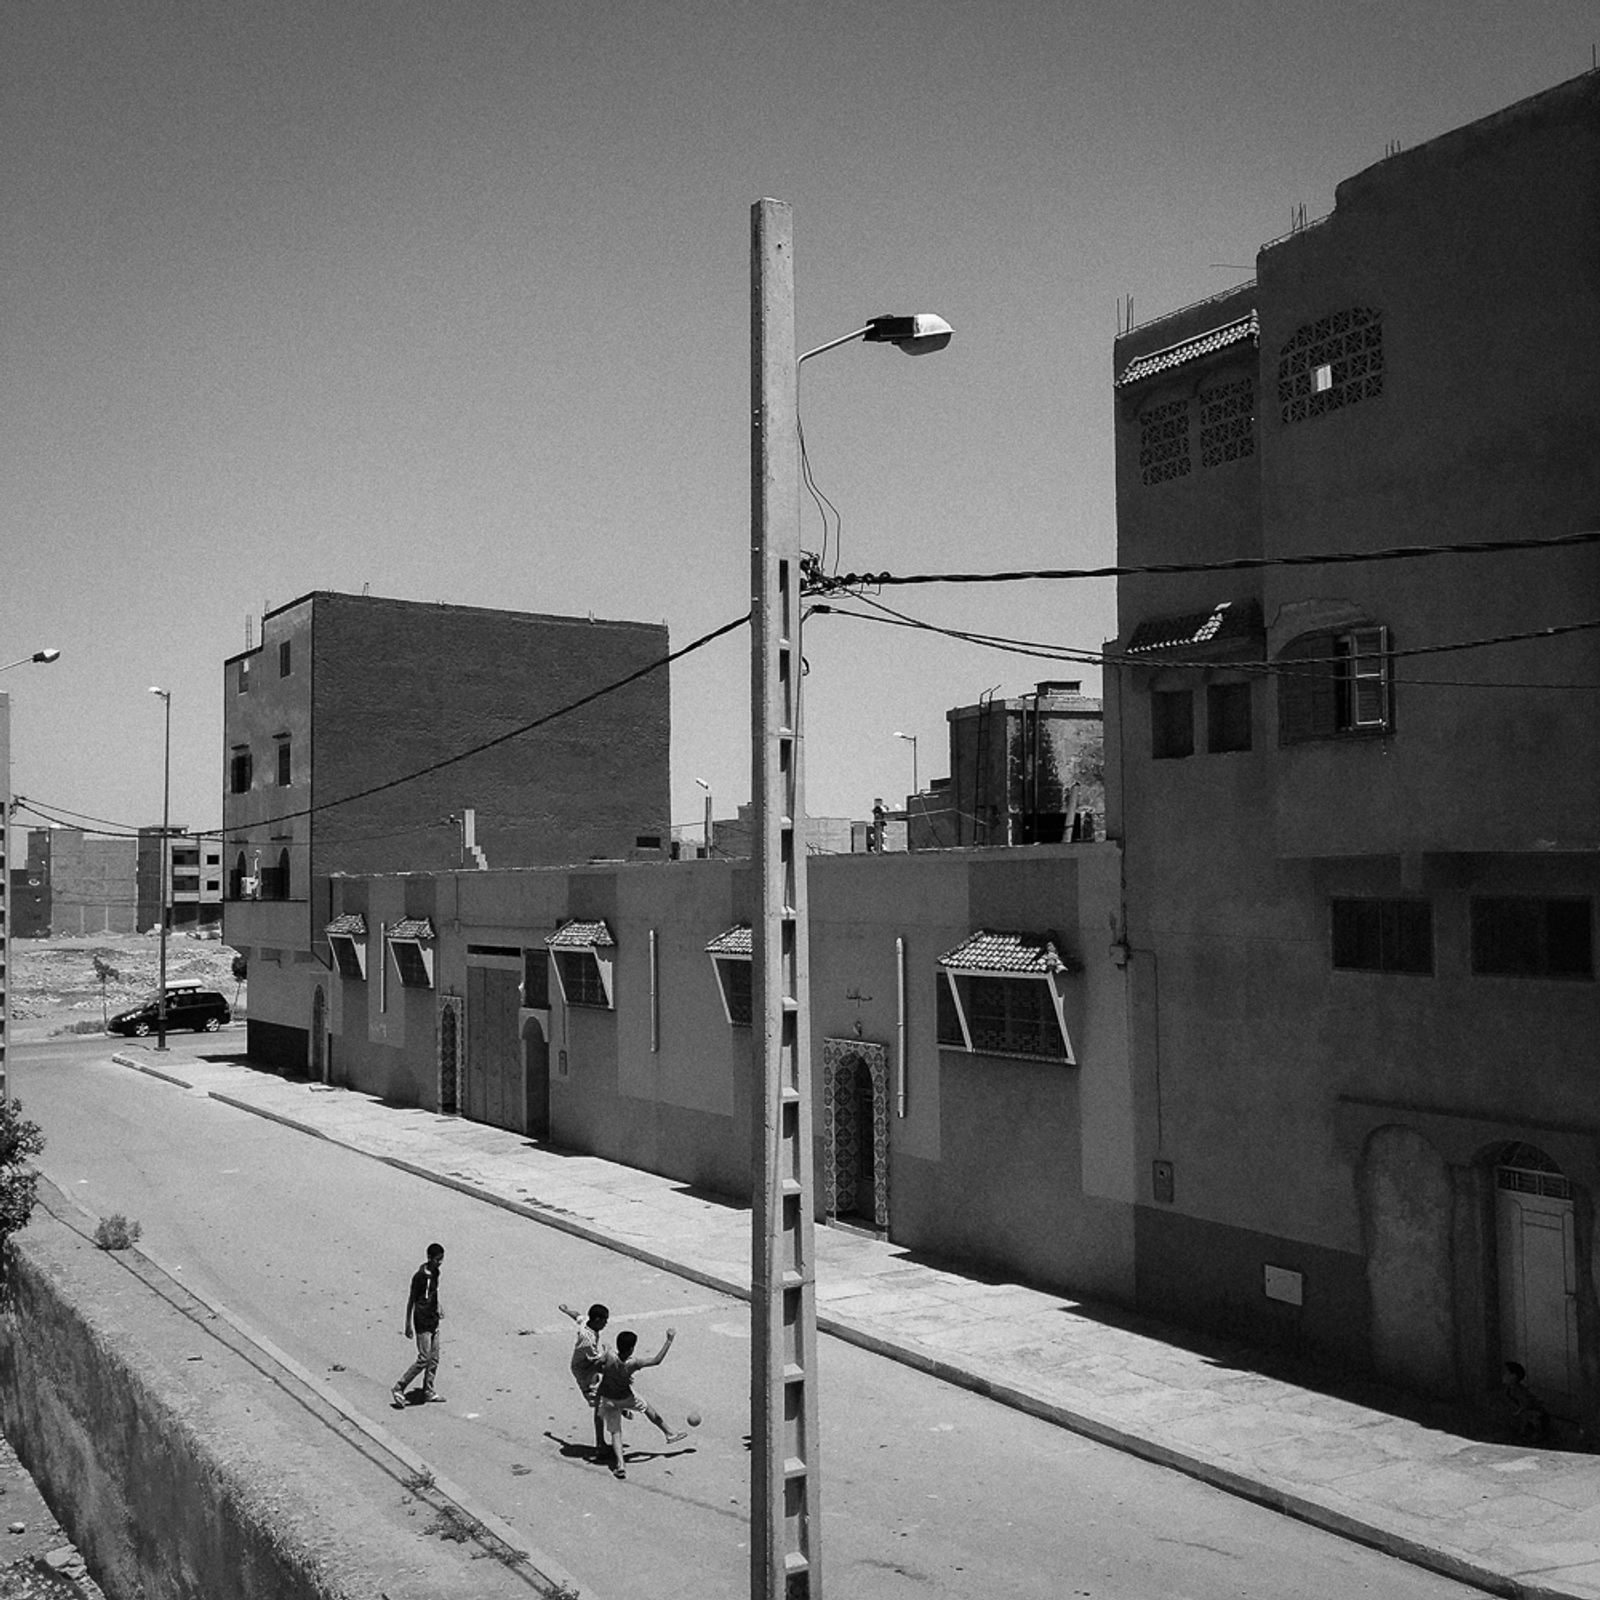 © Karim El Maktafi - Image from the Hayati photography project